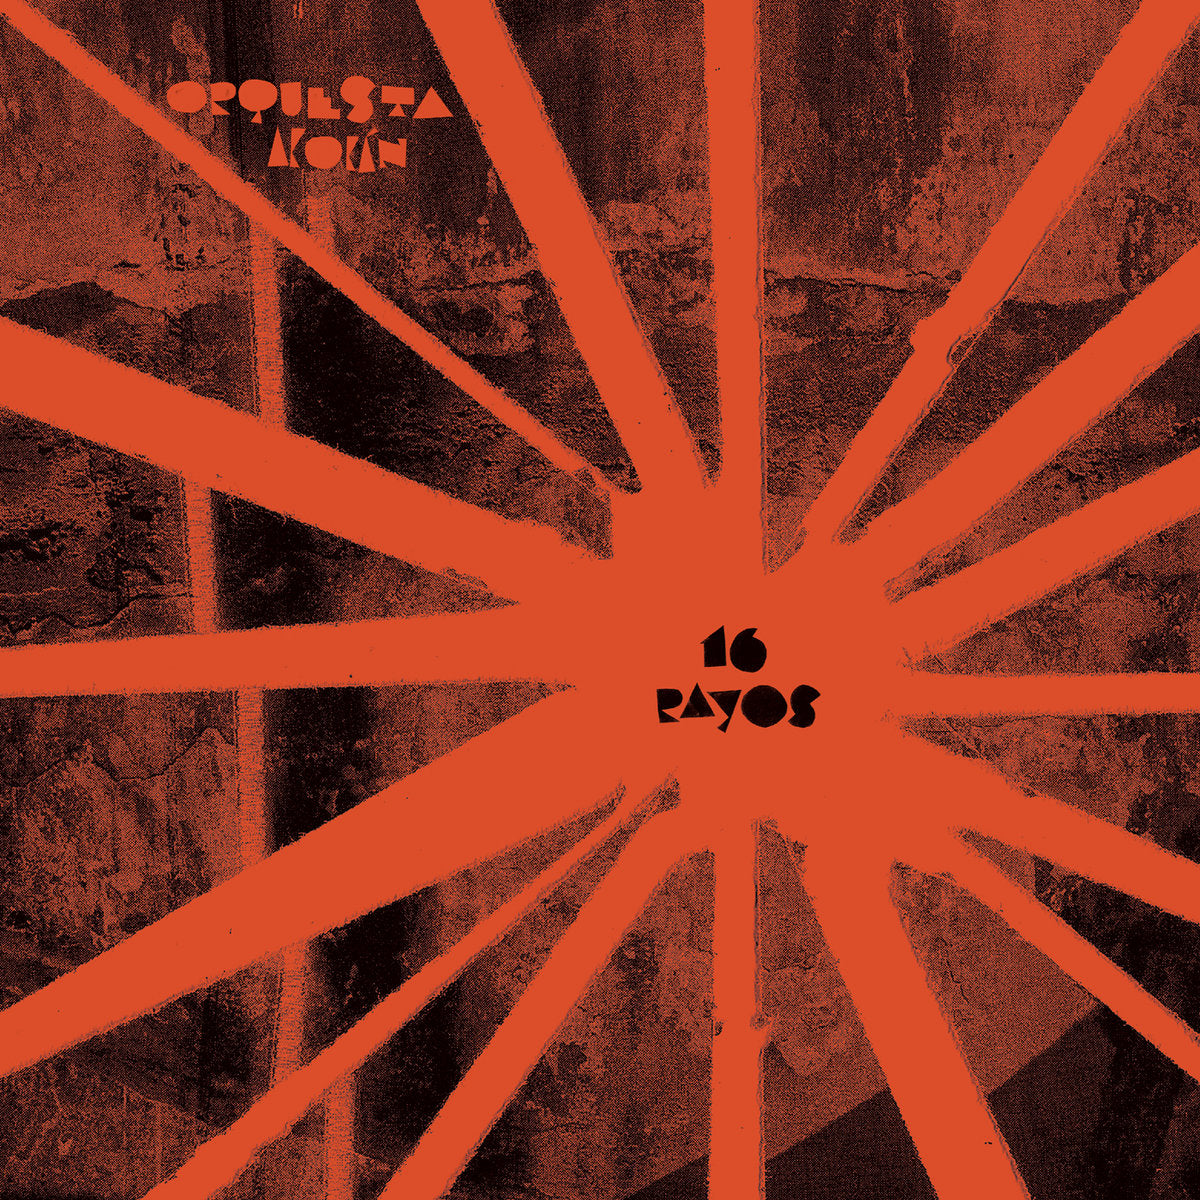 Orquesta Akokan - 16 Rayos (Vinyl LP)